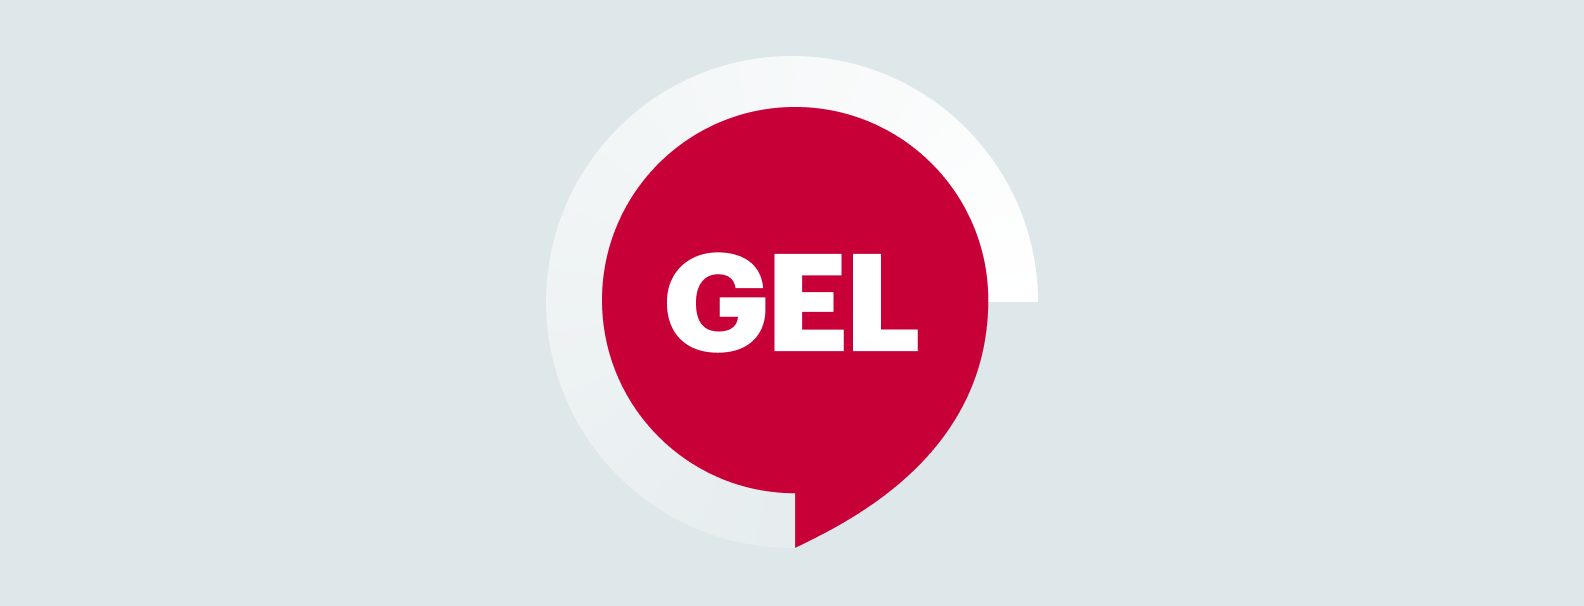 What is GEL?